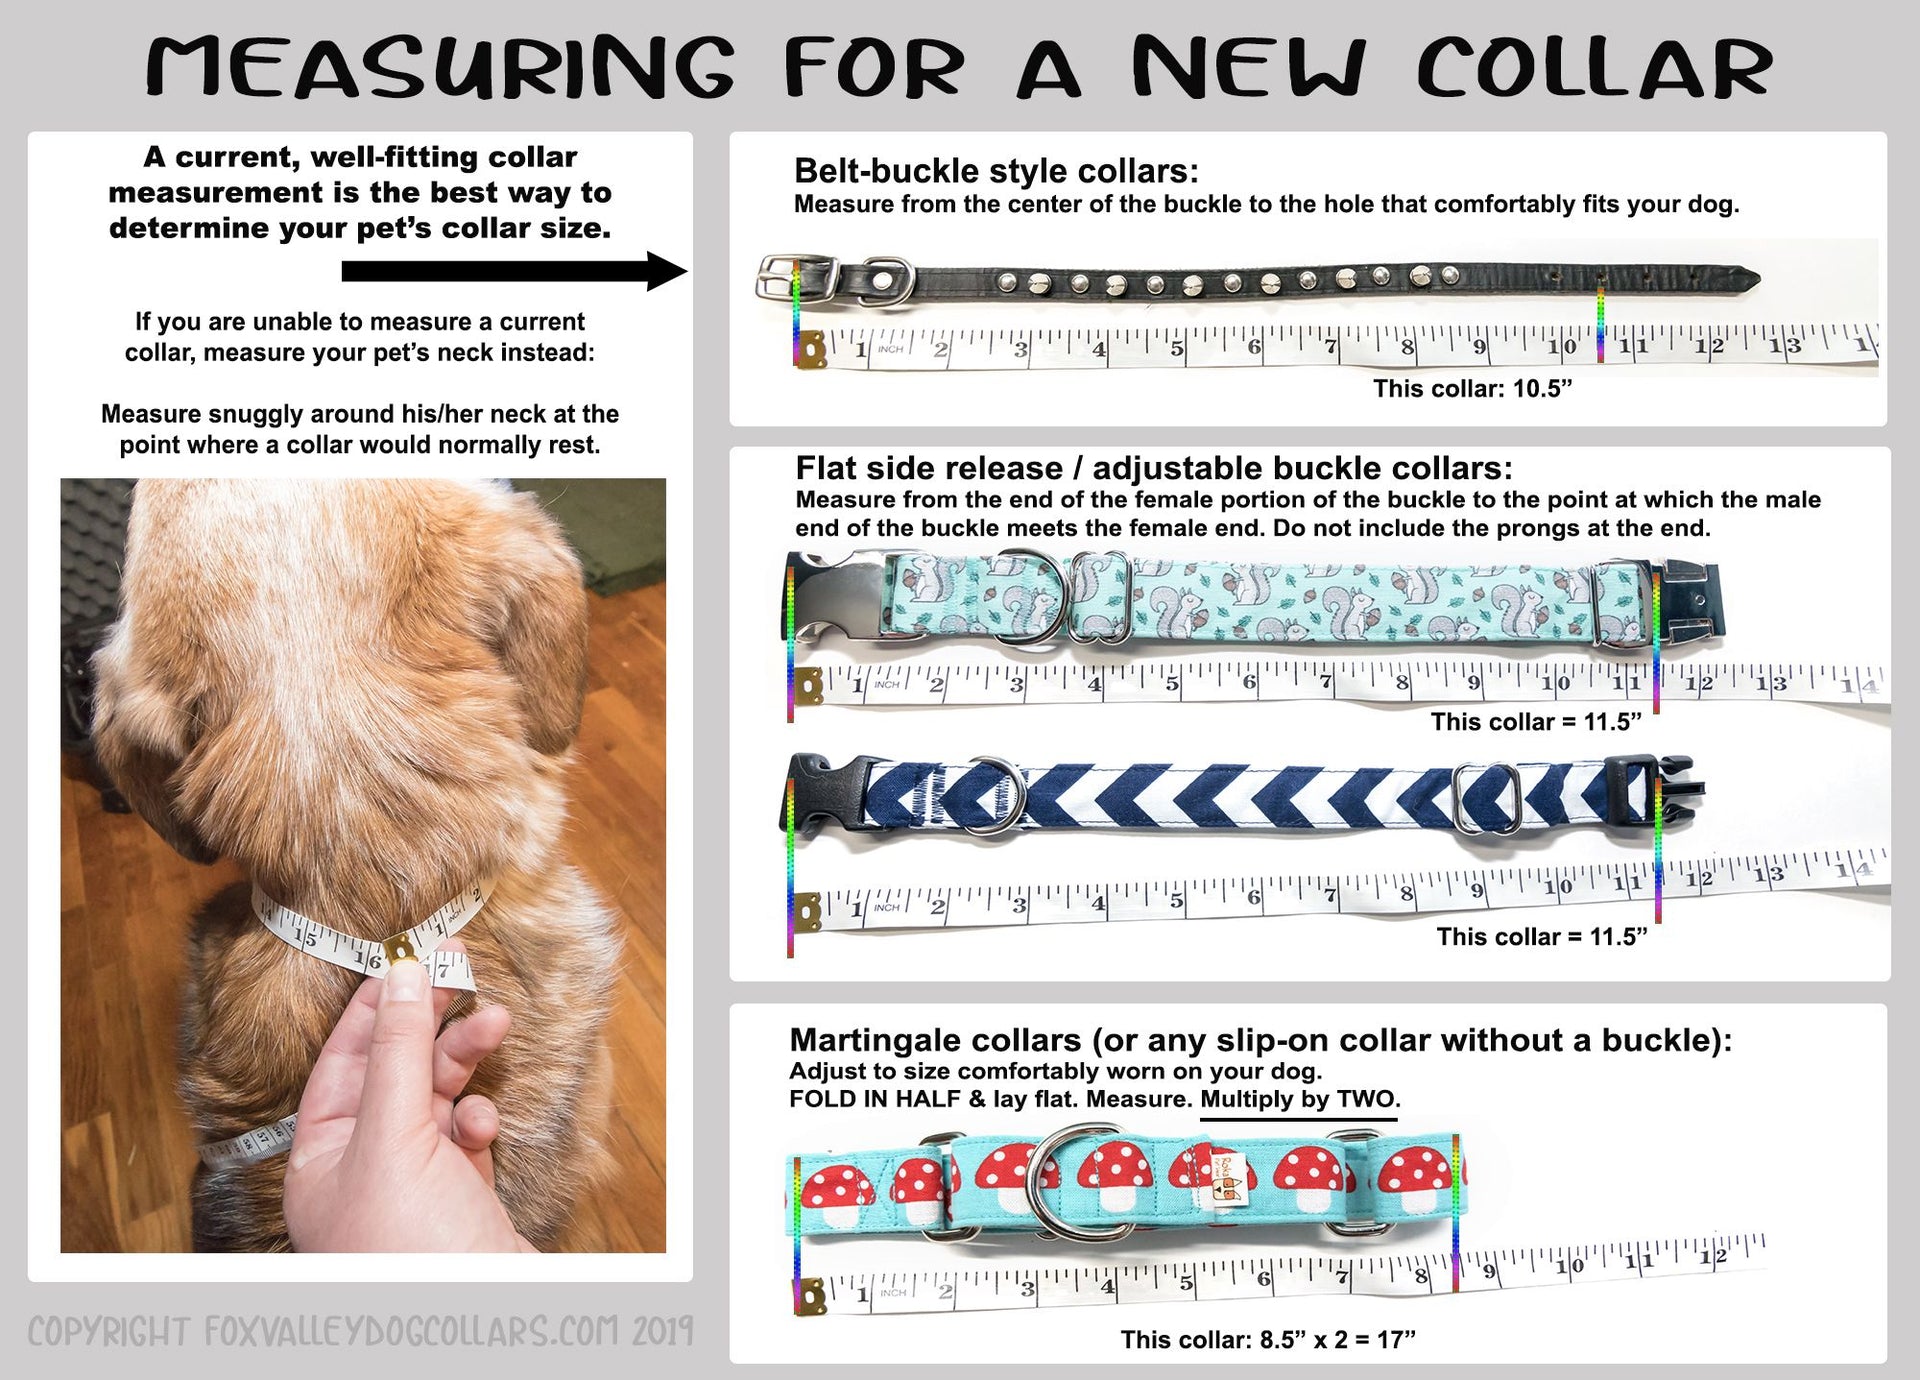 Chartreuse & Olive Green Leafy Scrolls Adjustable Dog Collar - Fox Valley Pet Wear